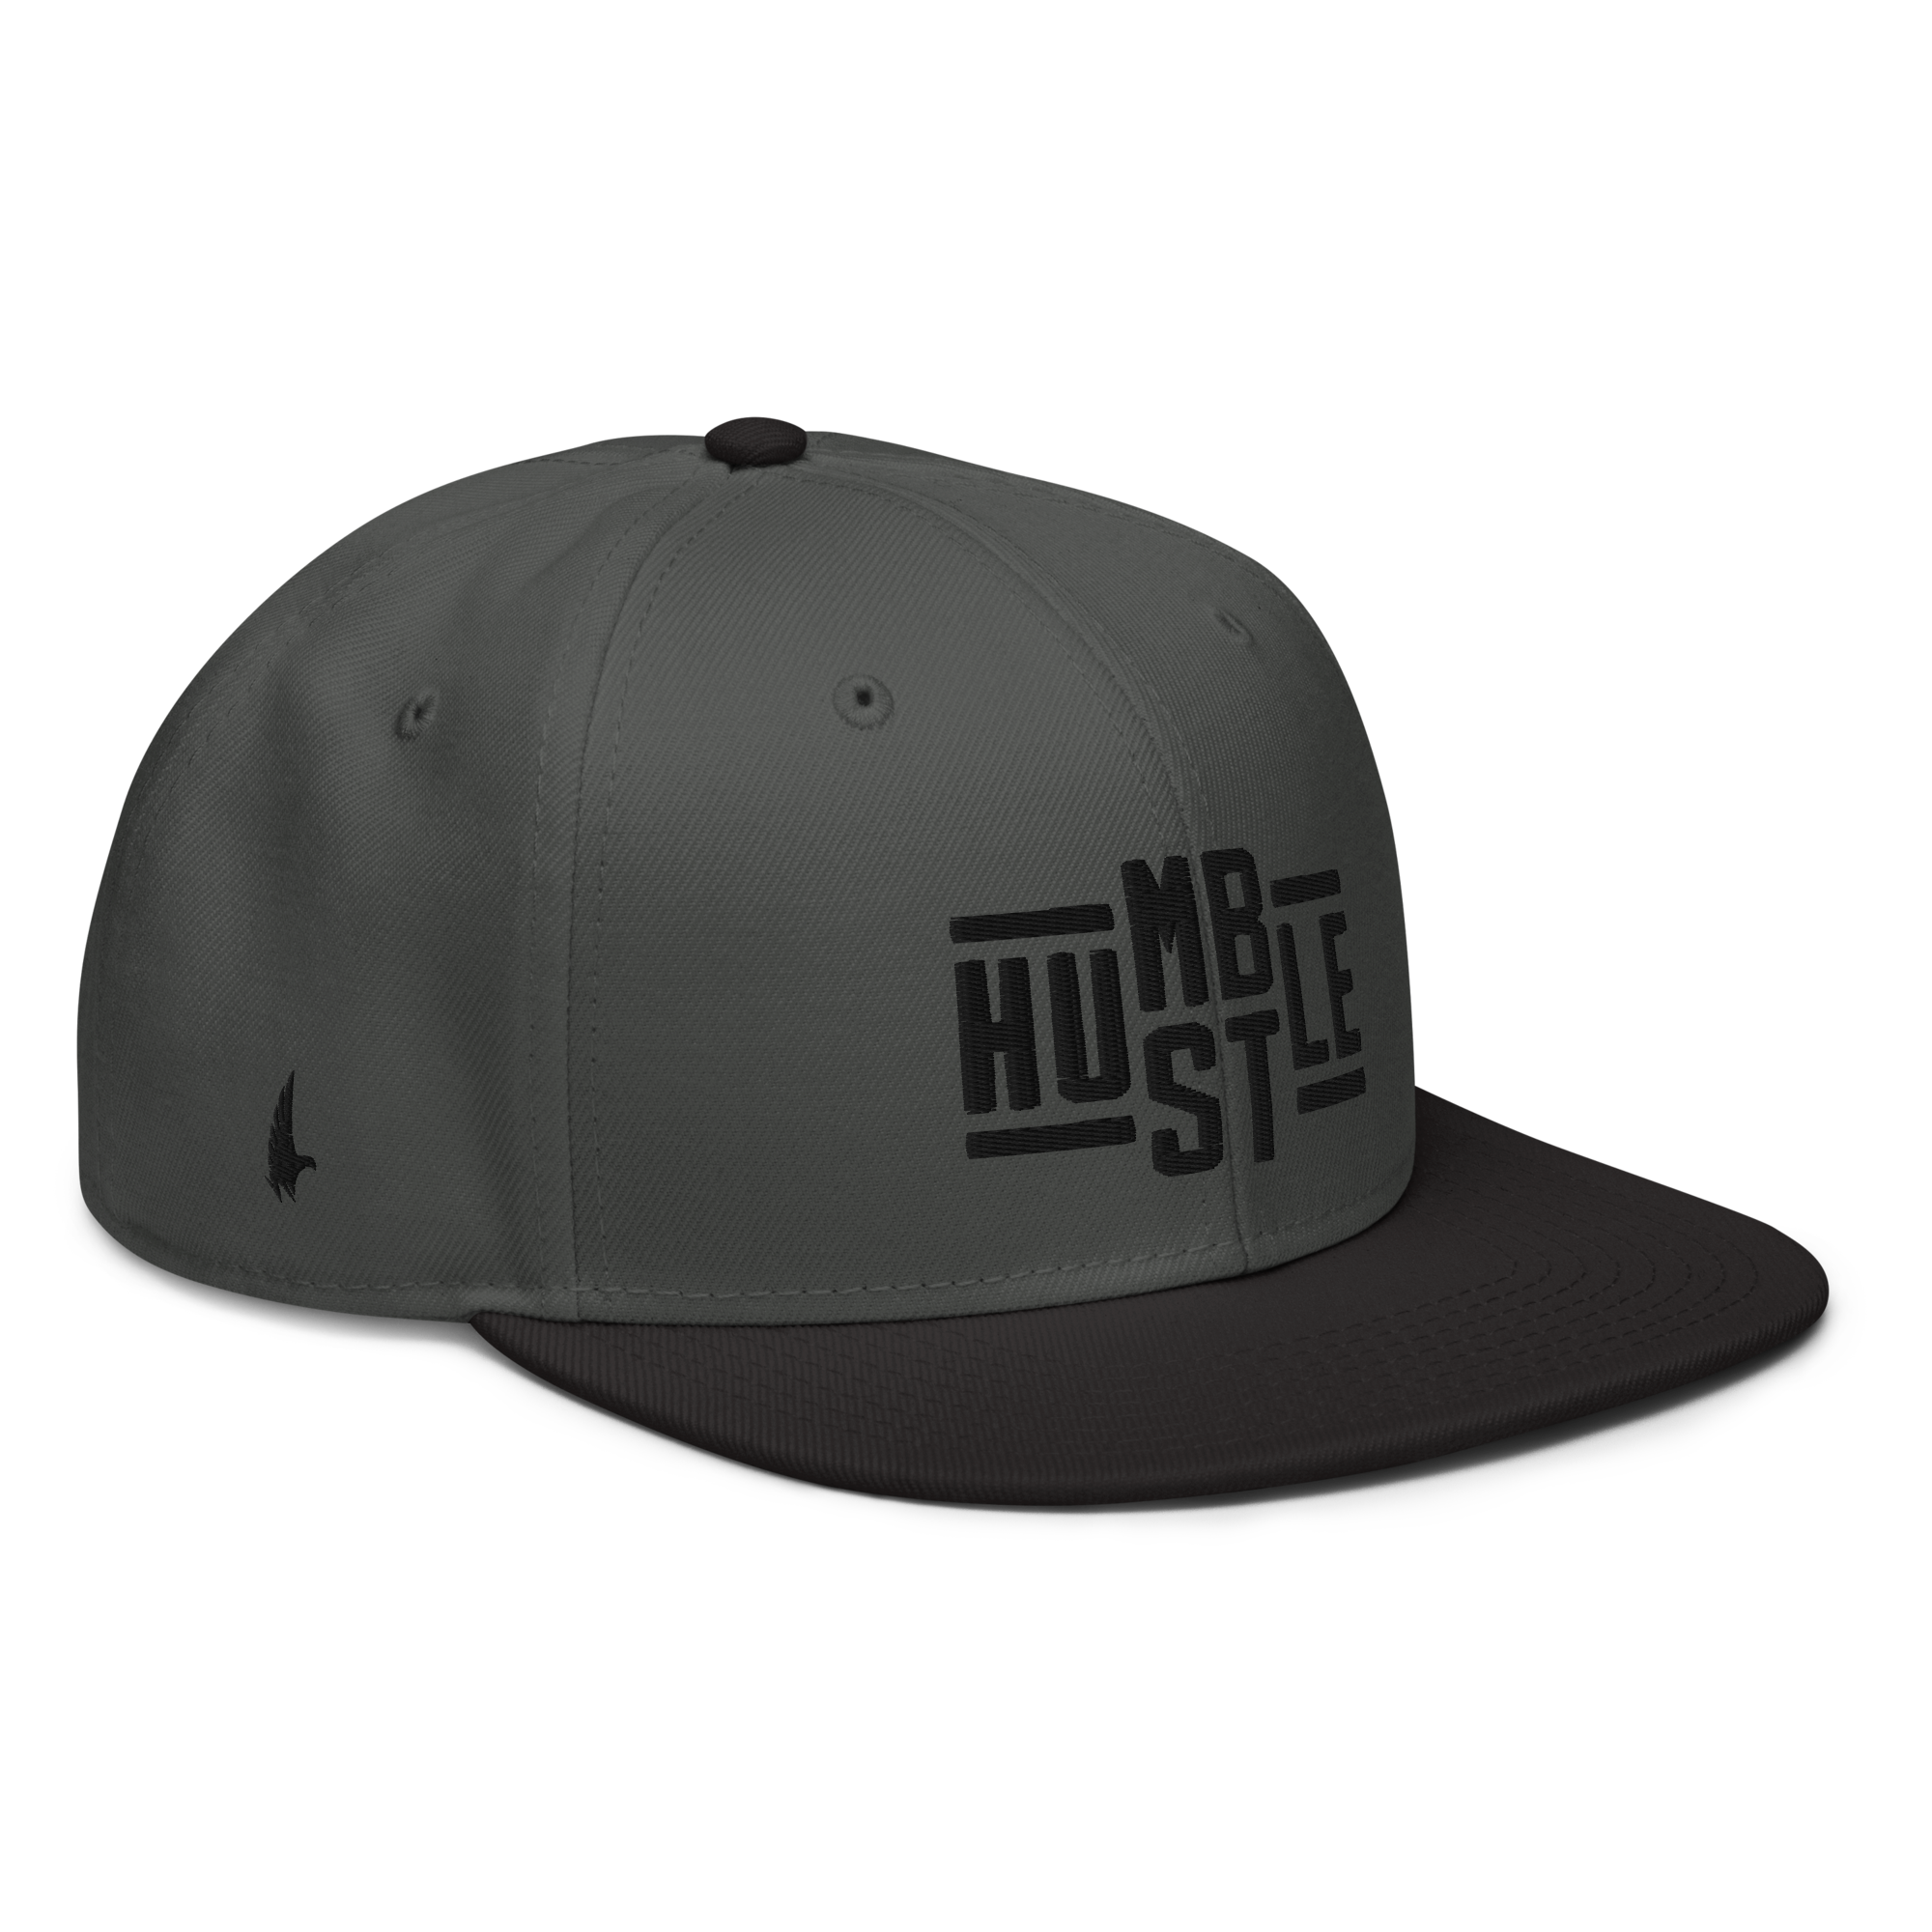 Hustle Snapback Hat Charcoal Gray/Black/Black OS - Loyalty Vibes